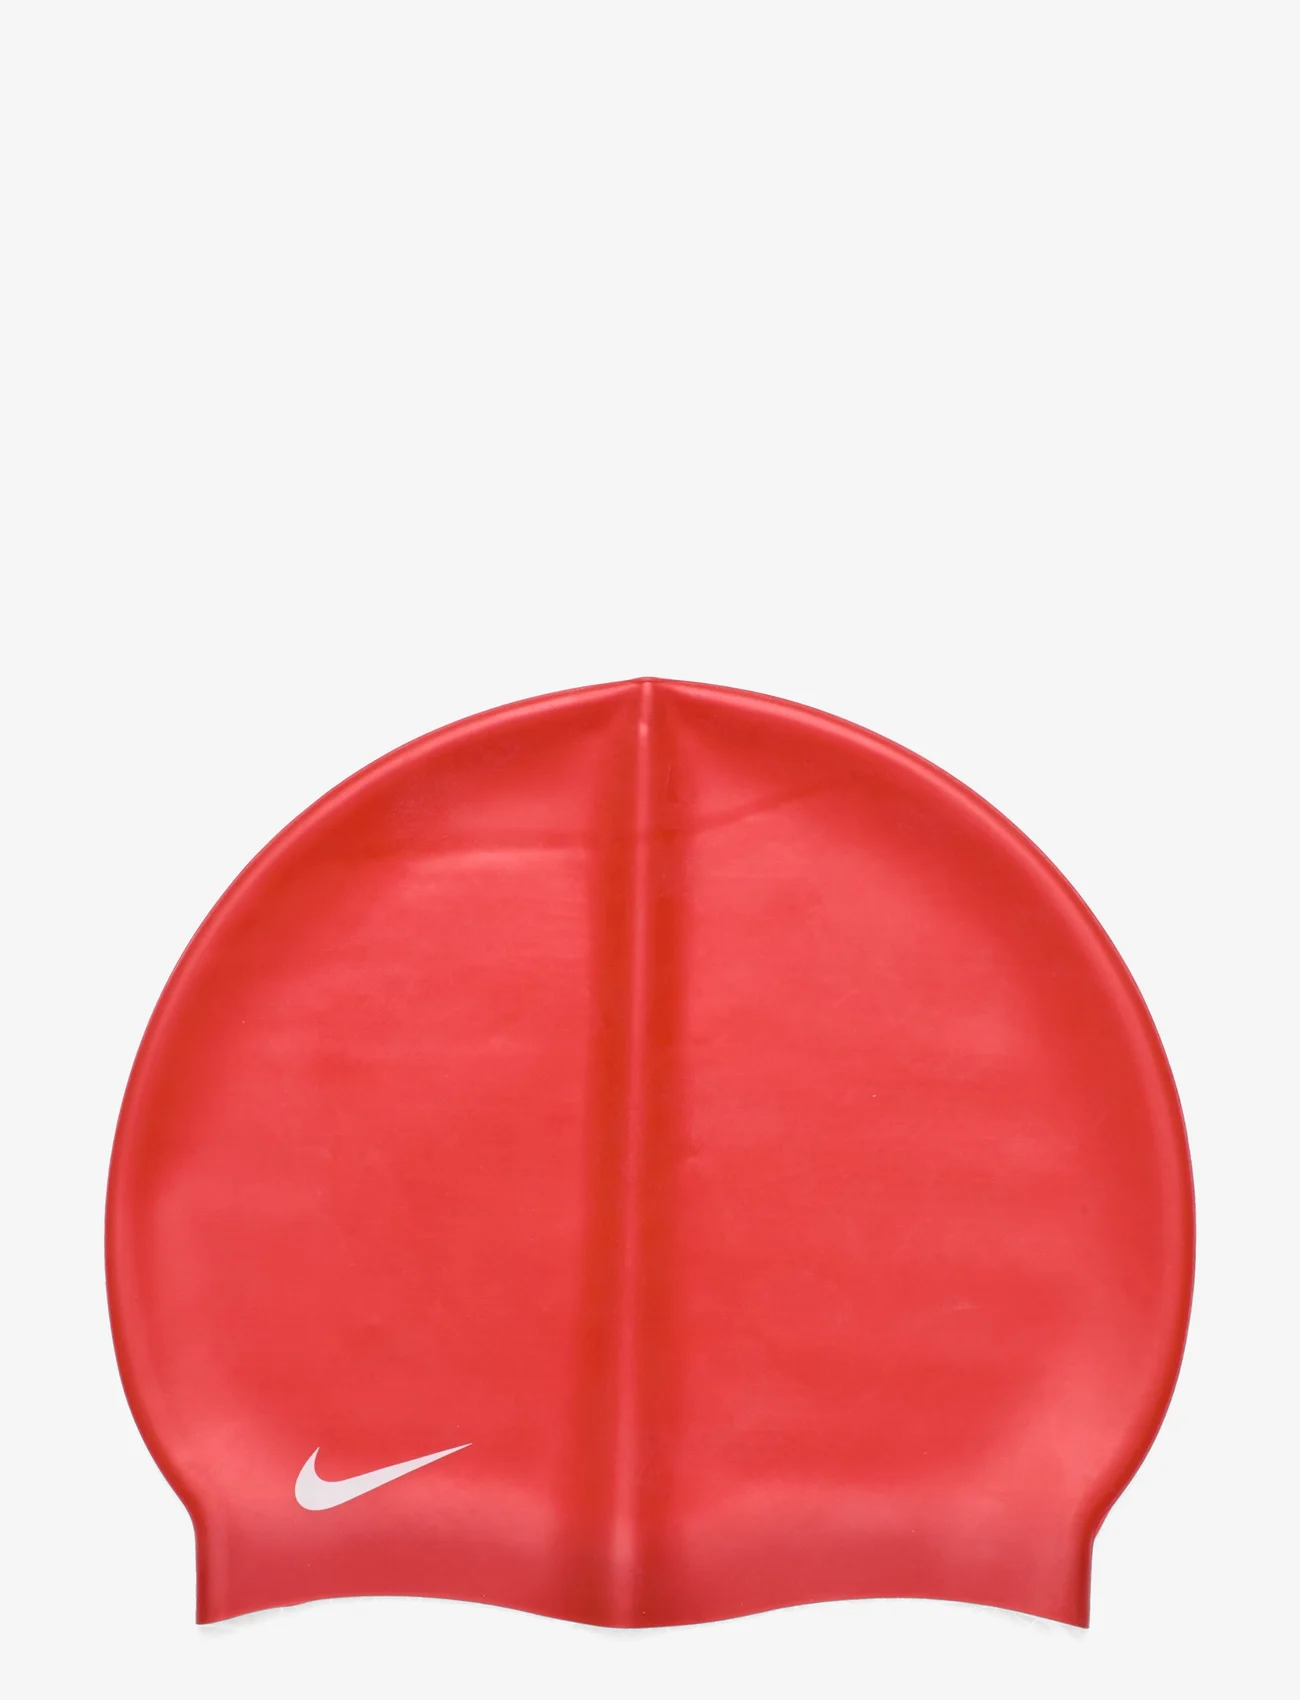 NIKE SWIM - Nike Cap Silikon - university red - 0